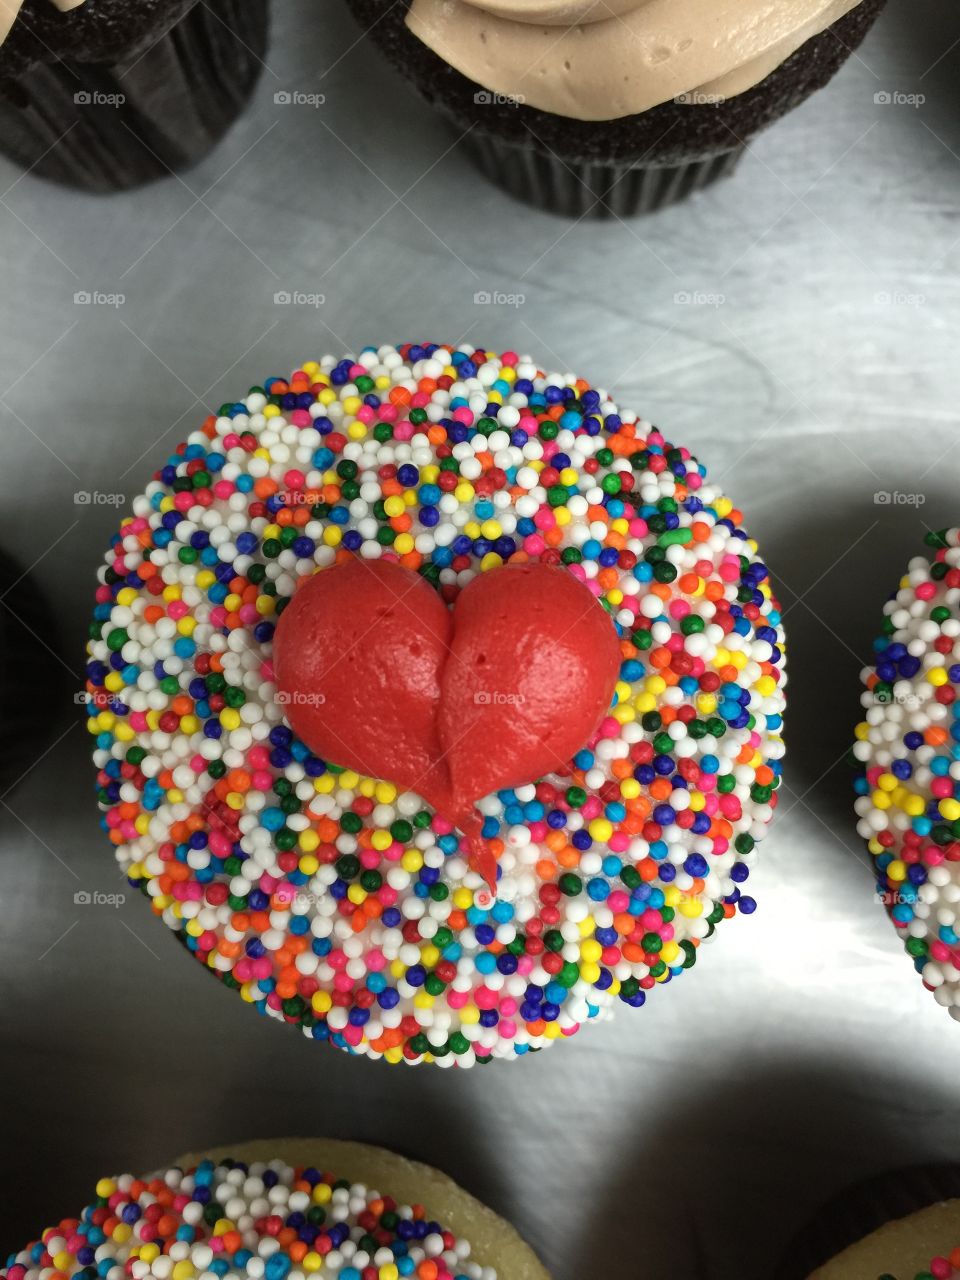 Universal love cupcake